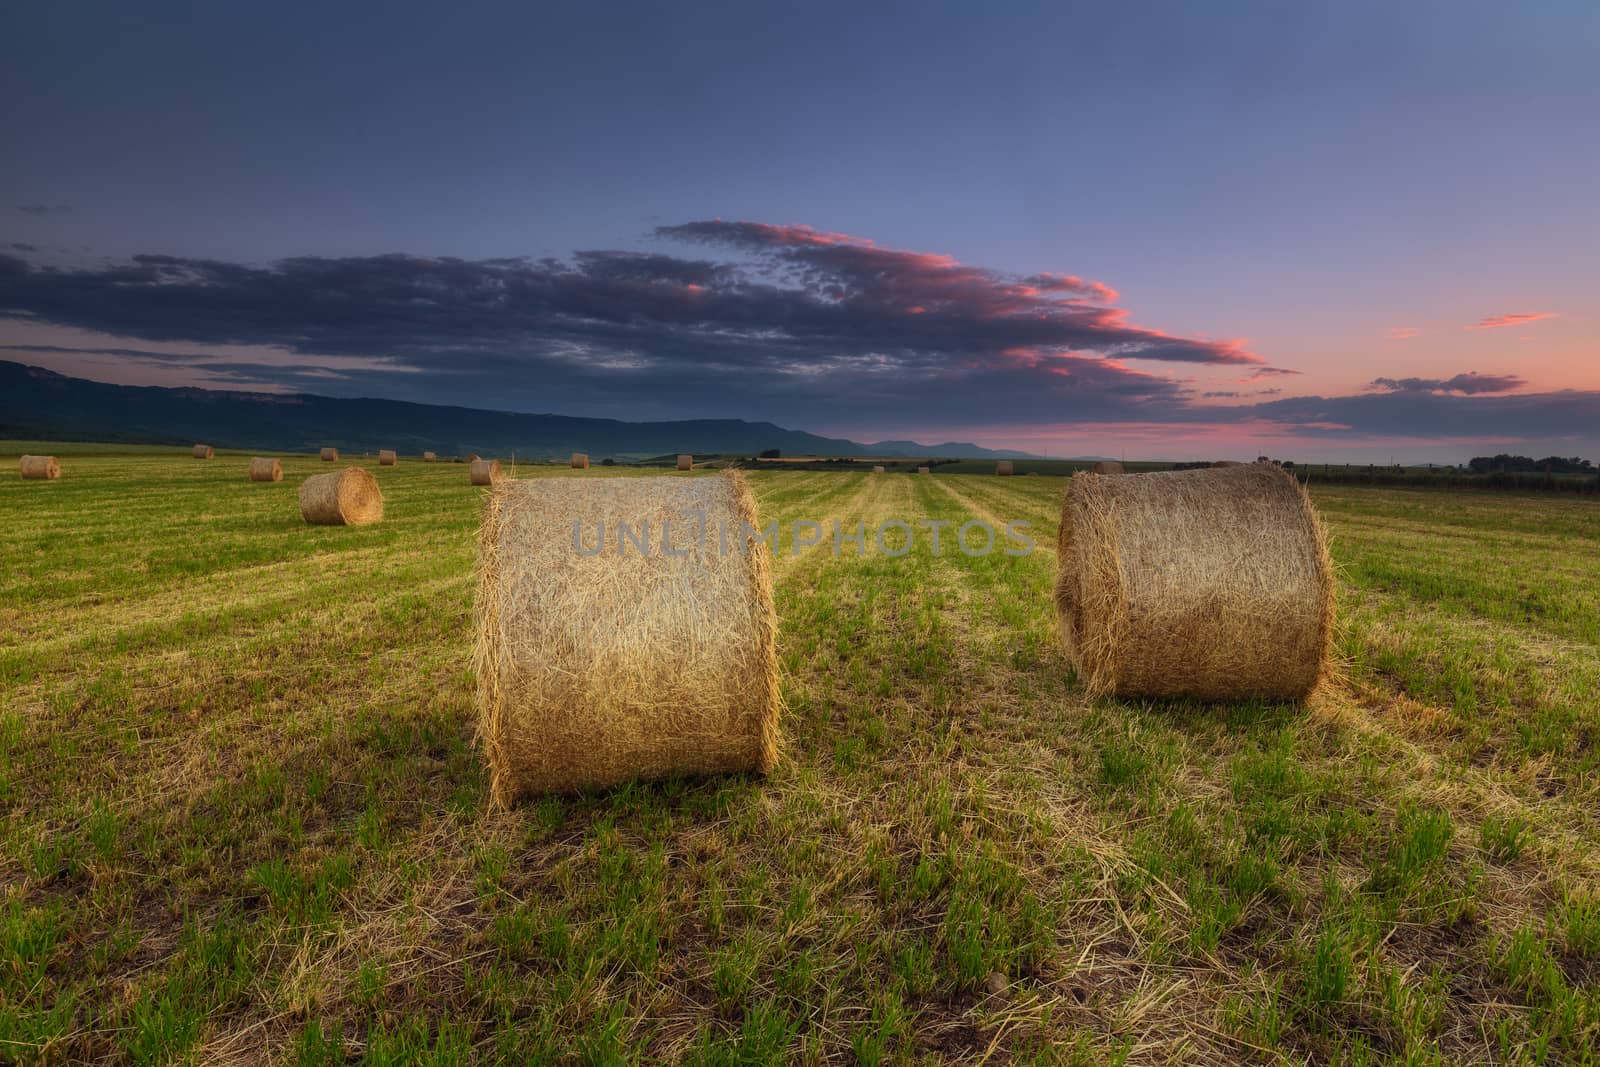 Harvest time, bundles in the field by aruizhu